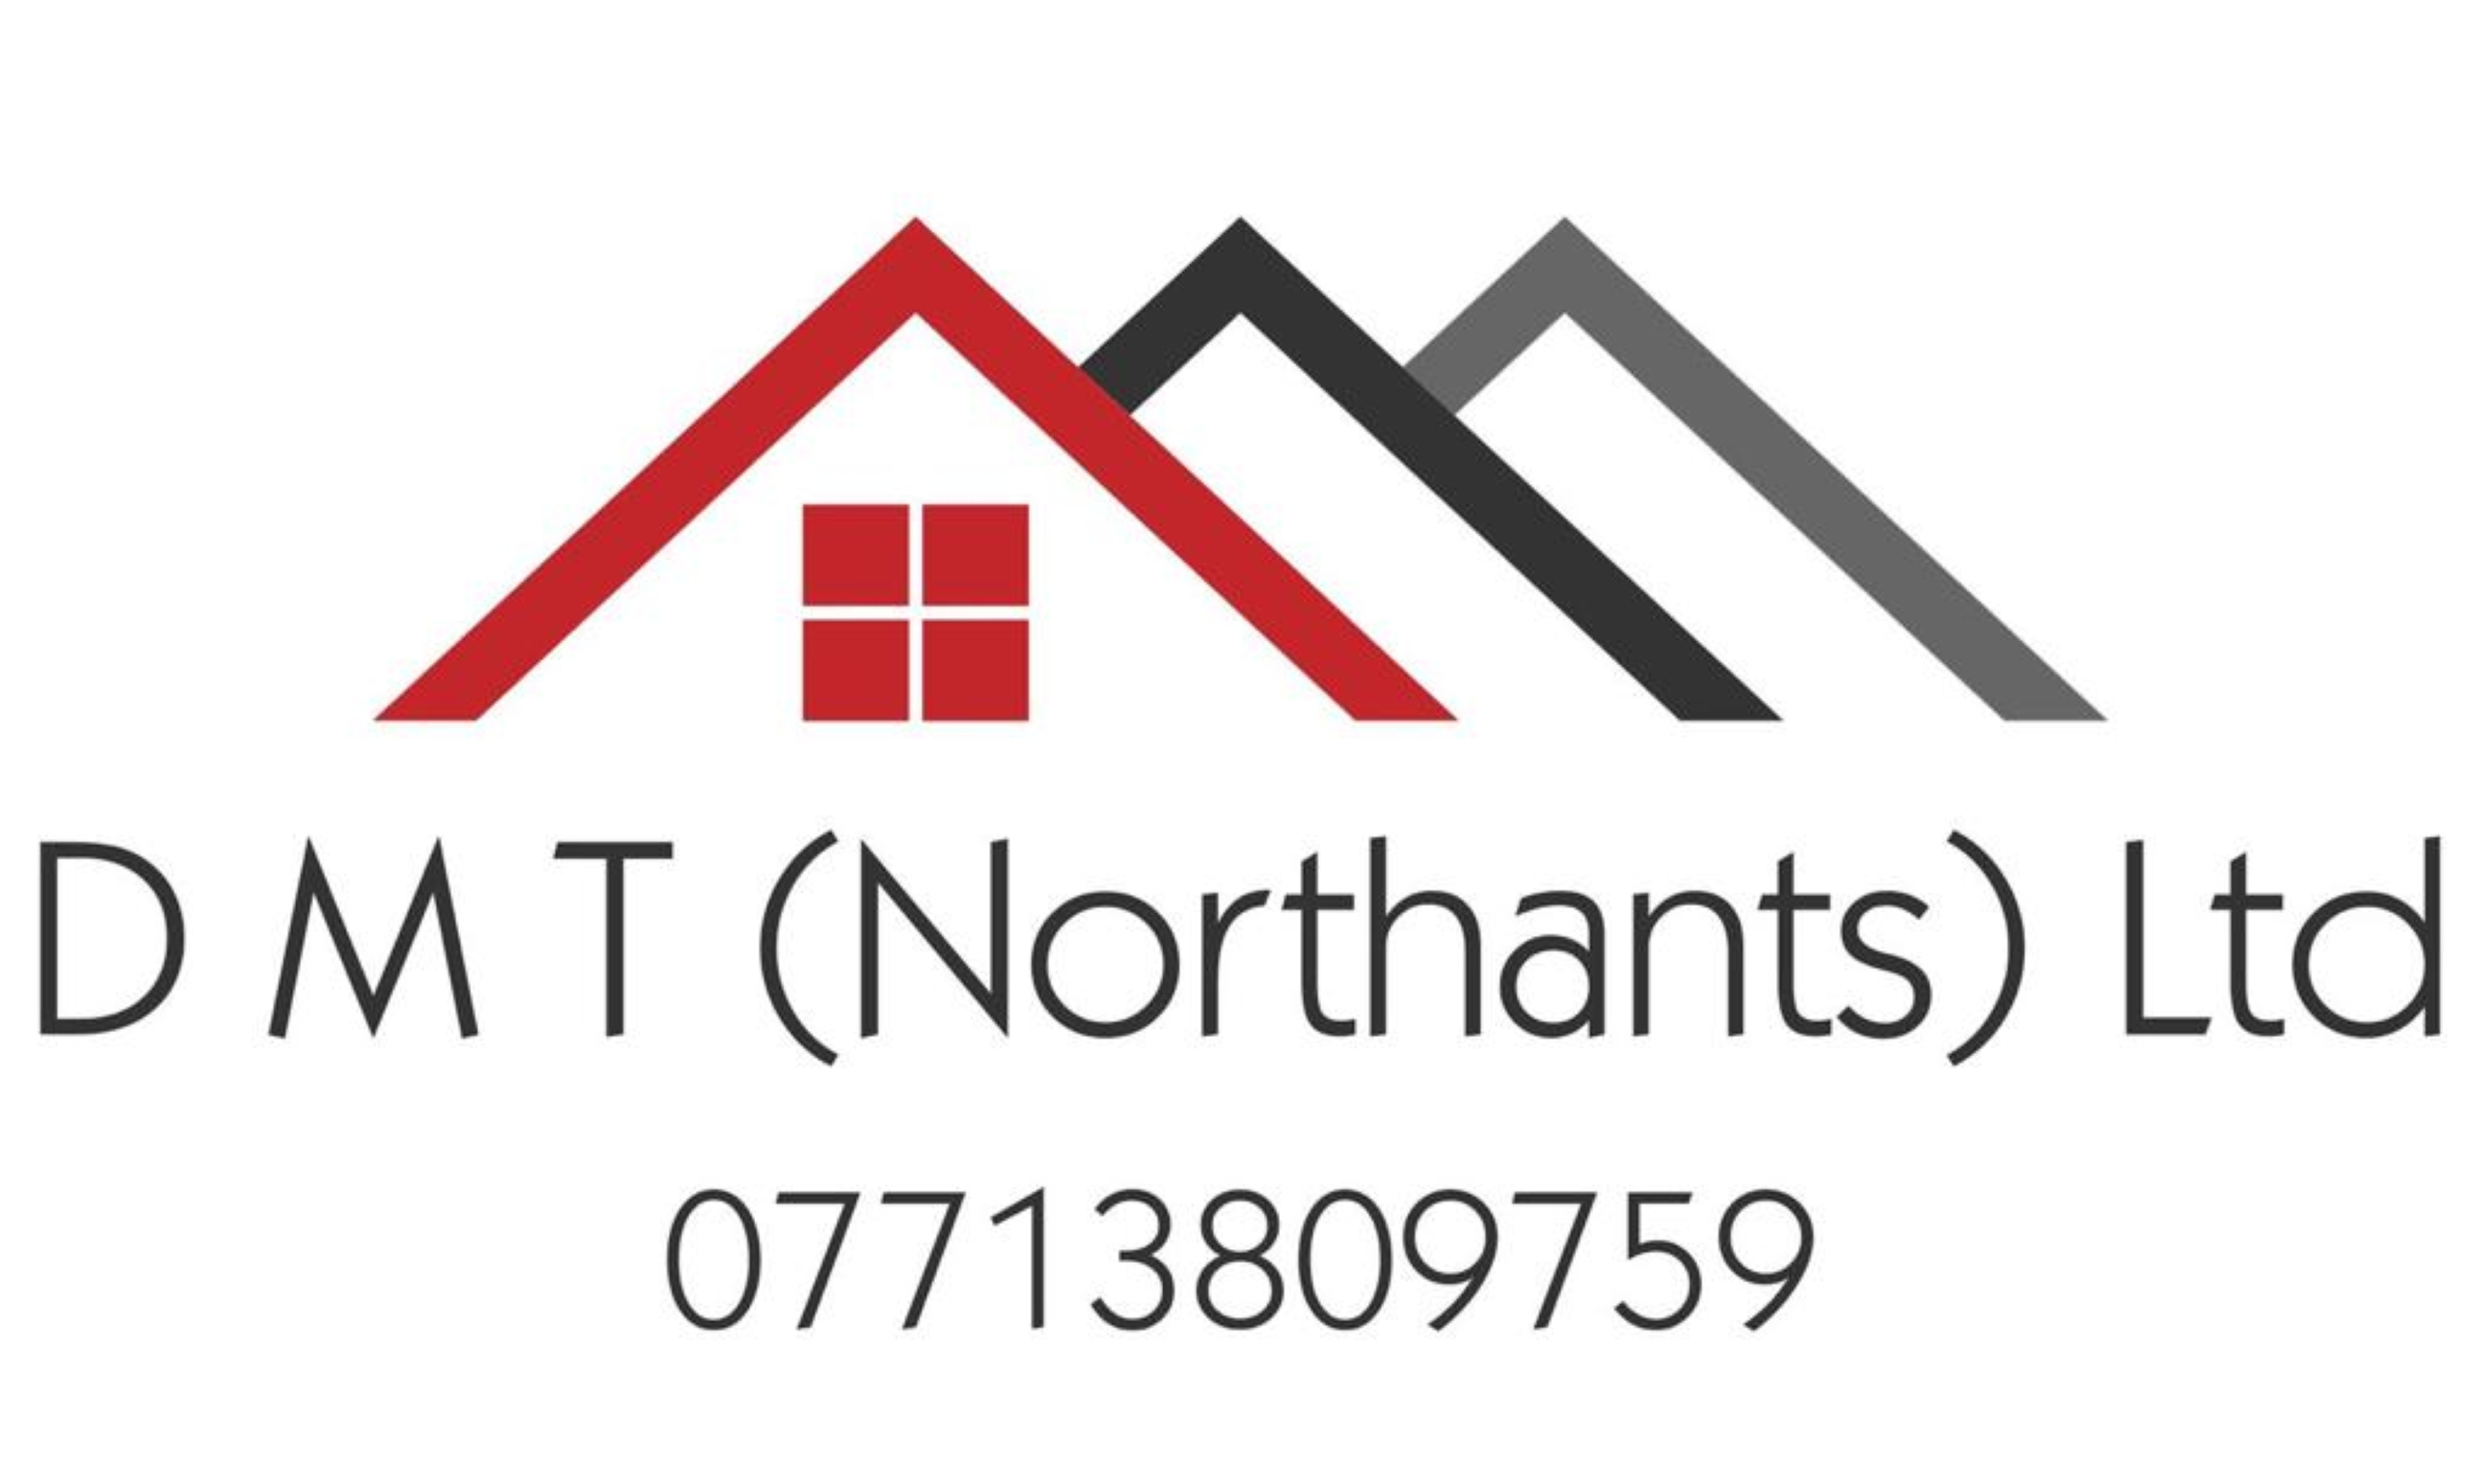 DMT (Northants) Ltd